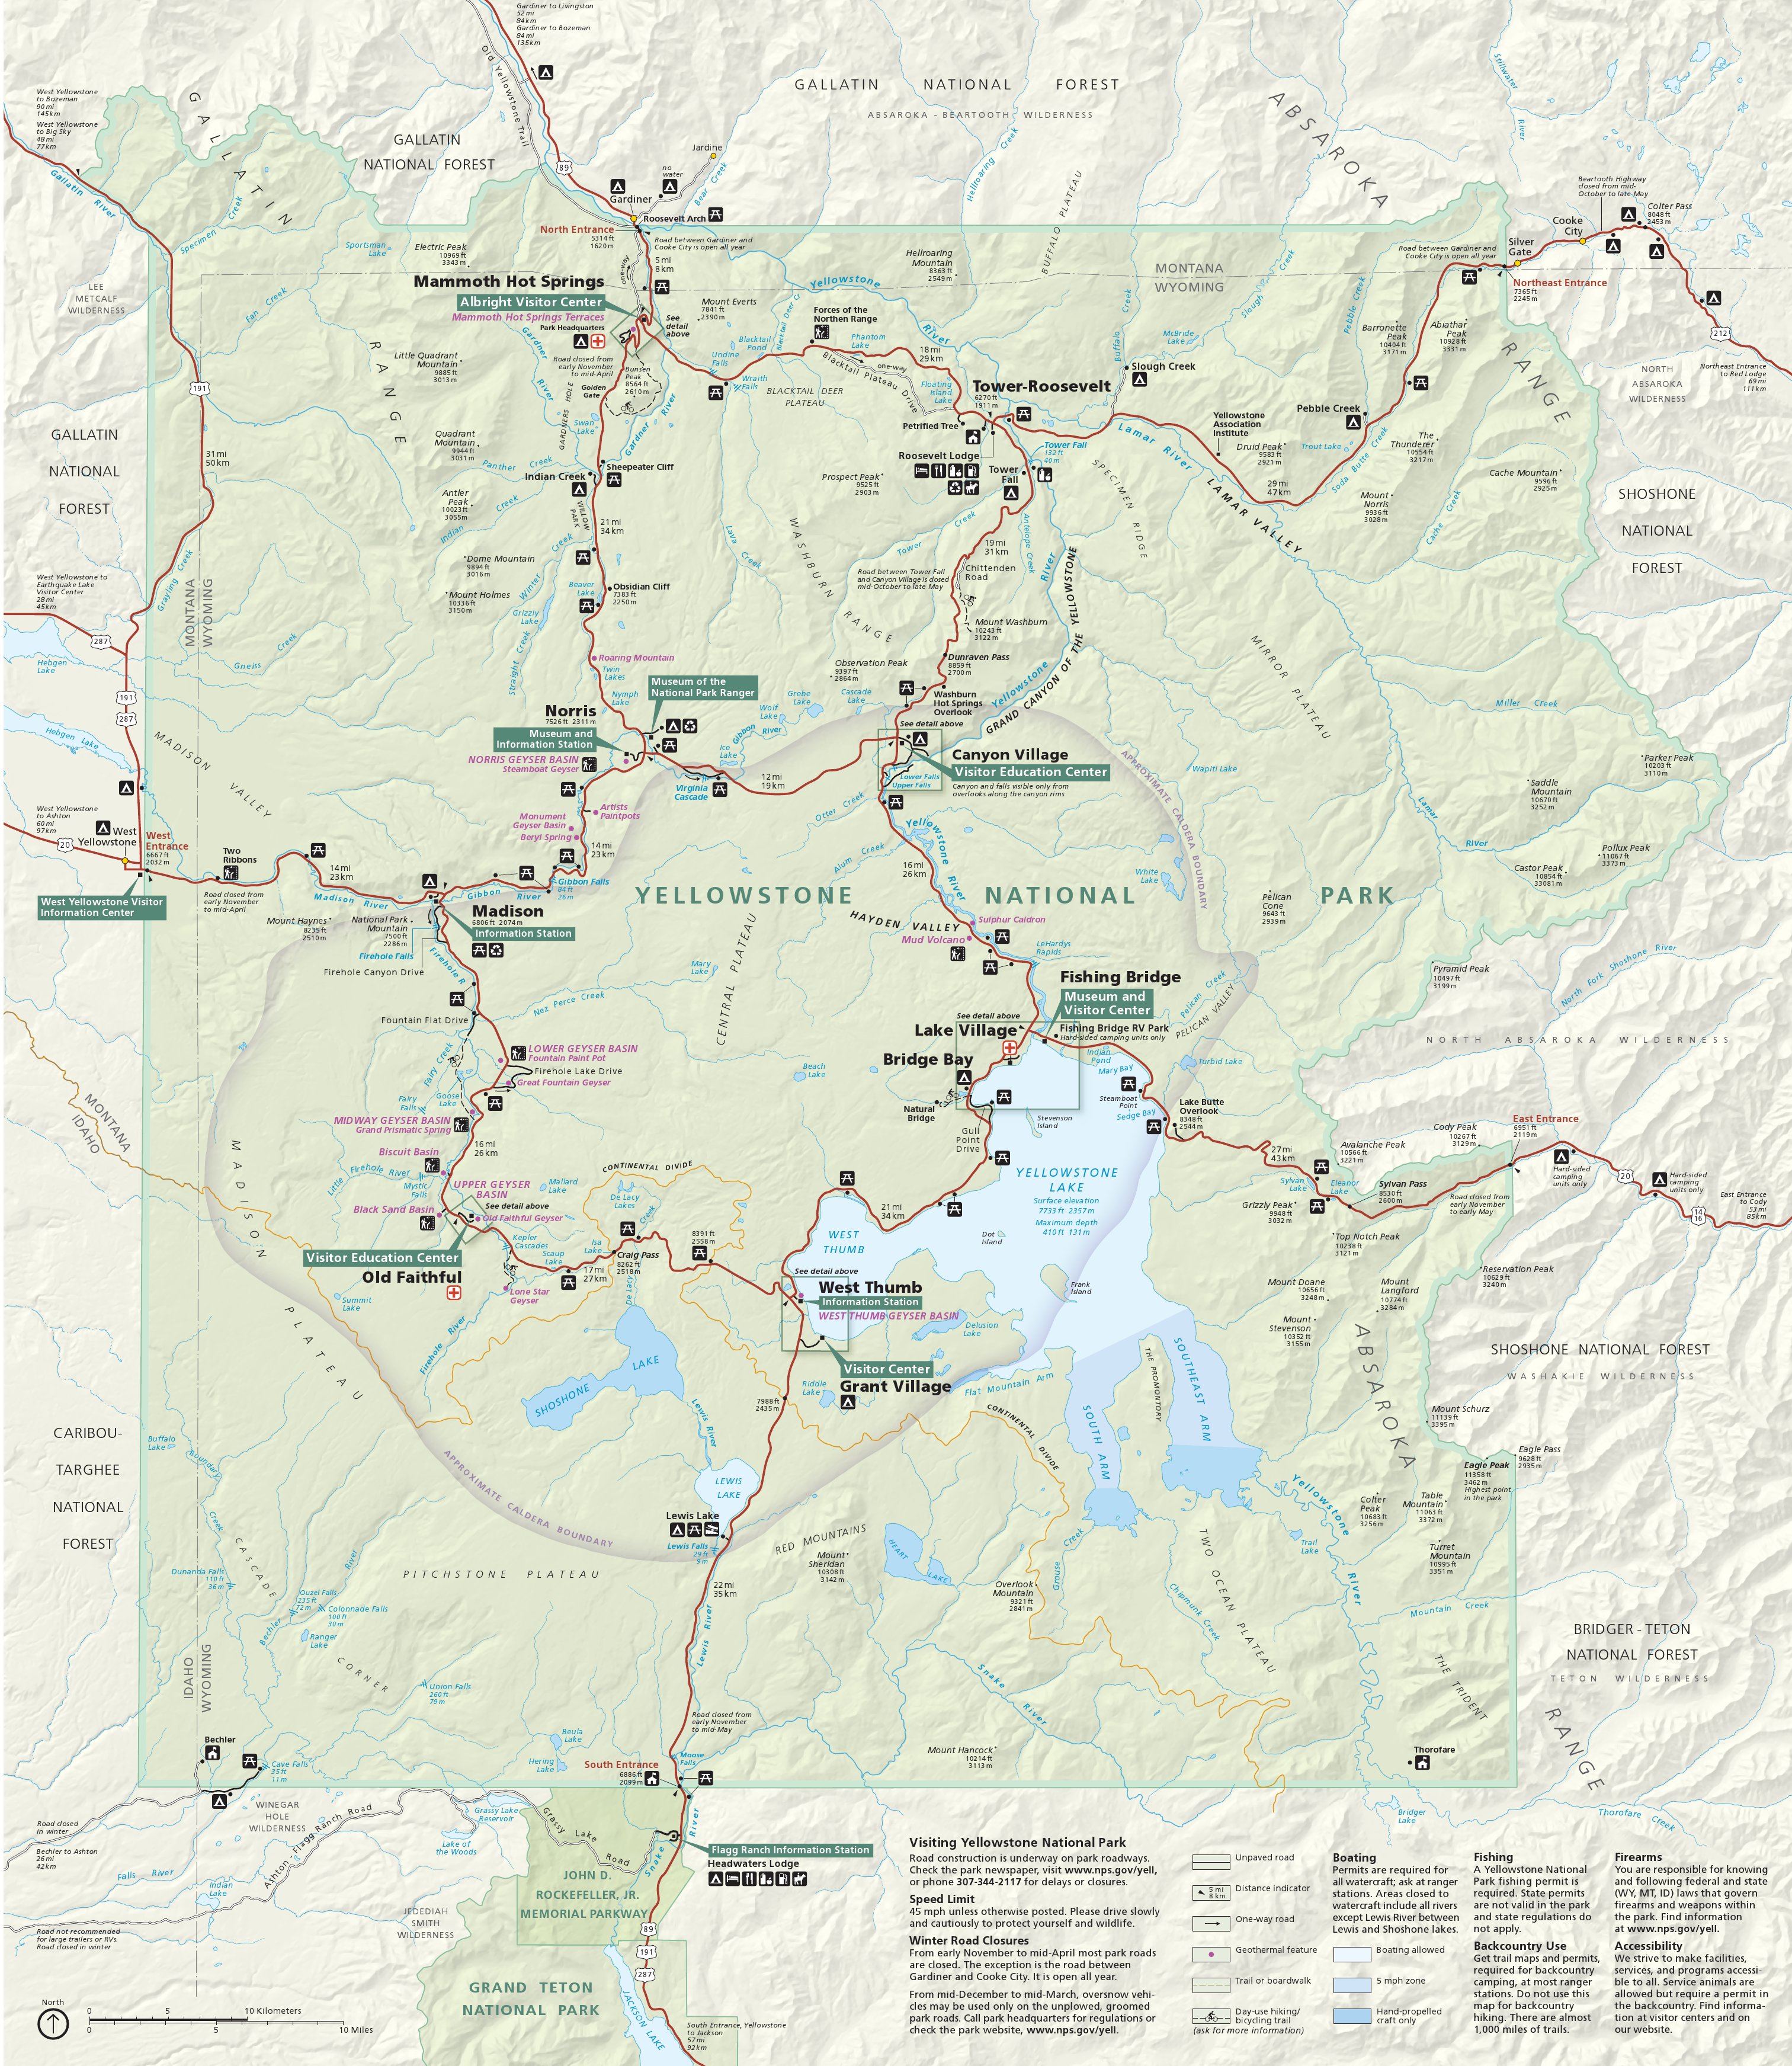 Yellowstone Maps | NPMaps. just free maps, period.